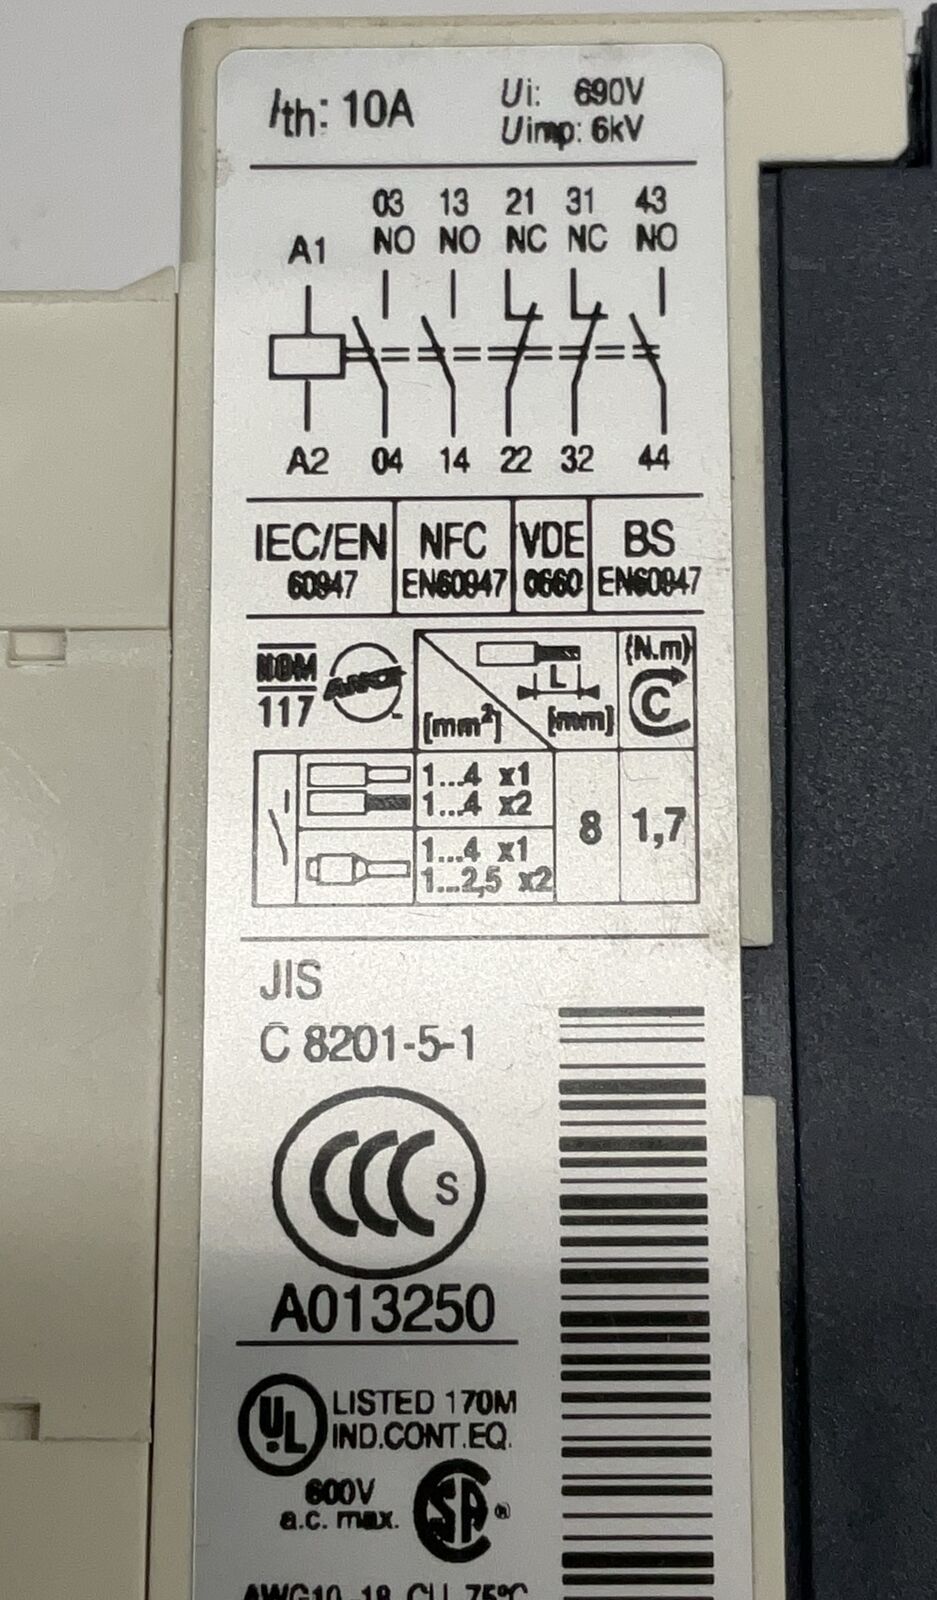 Schneider Electric Telemecanique CAD32BD 24VDC Control Relay (BK159)